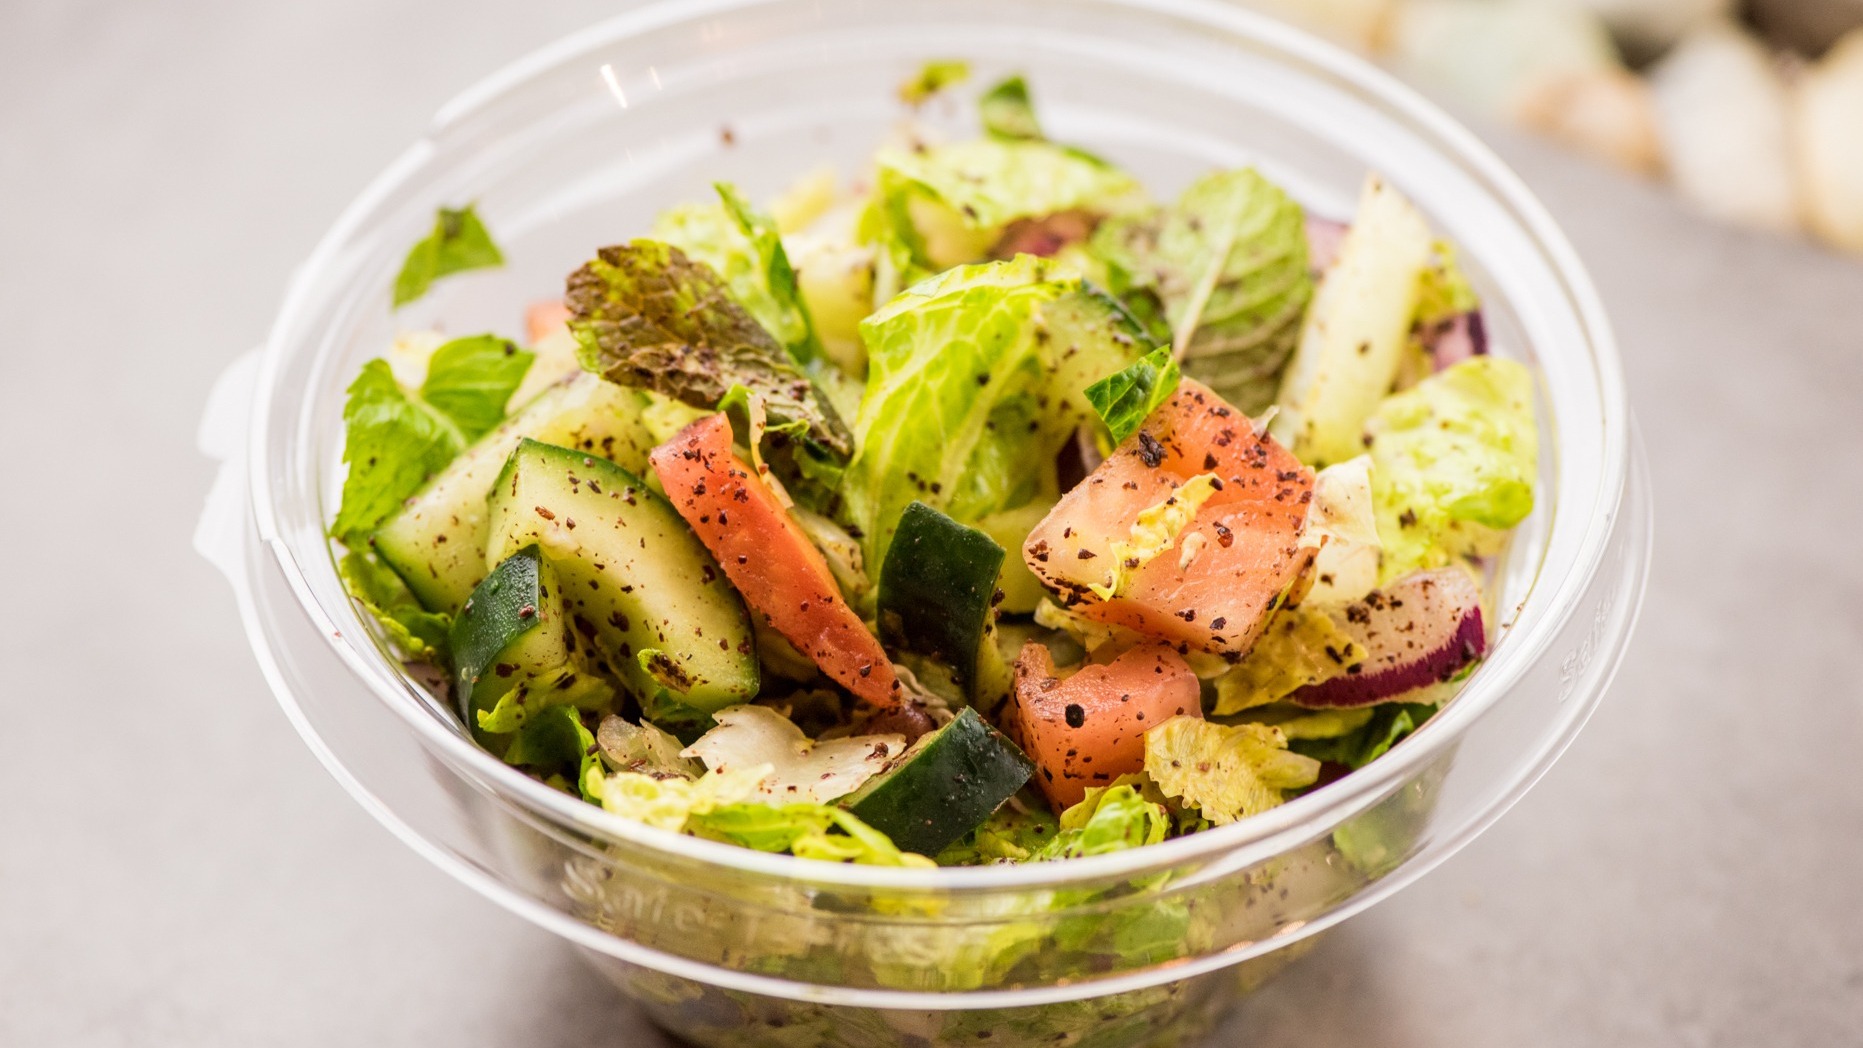 Fattouch Salad